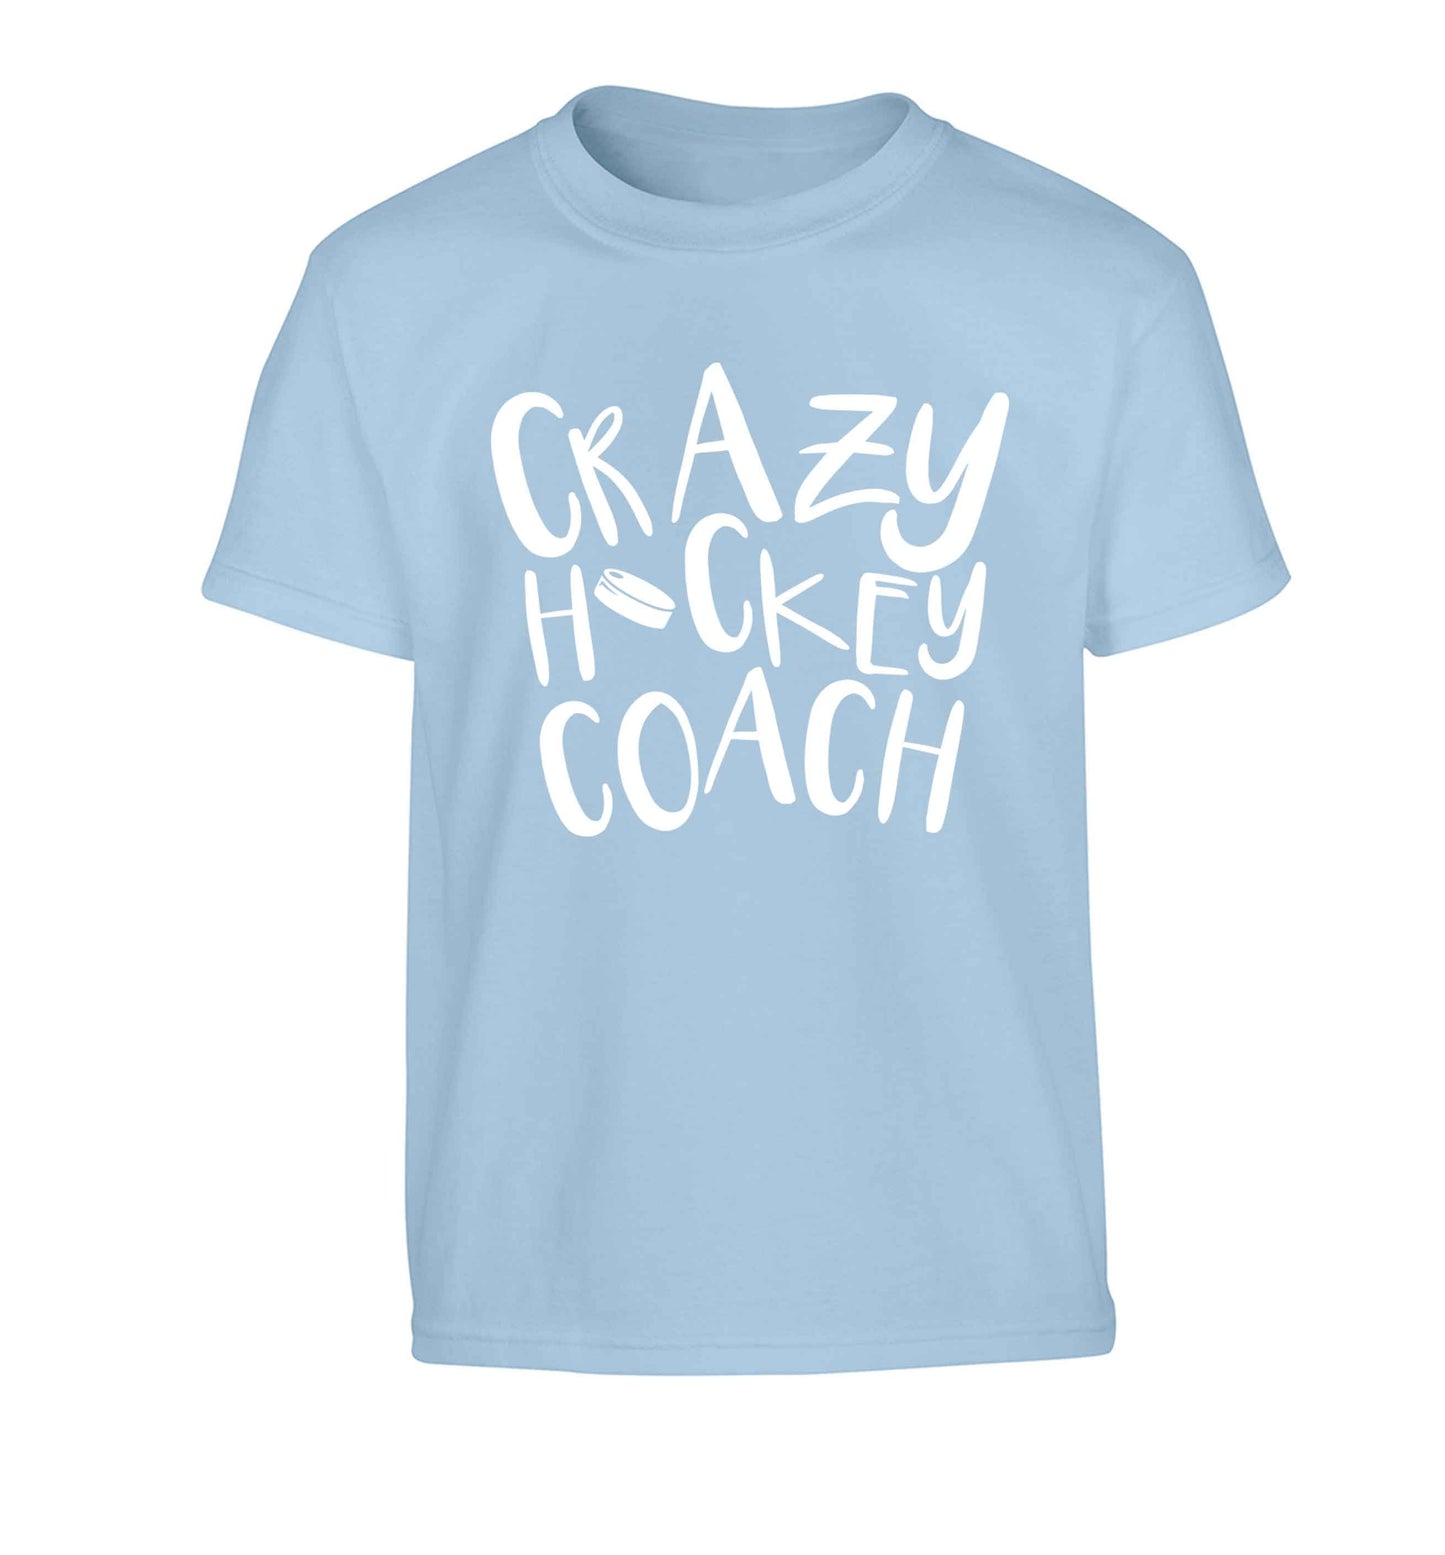 Crazy hockey coach Children's light blue Tshirt 12-13 Years